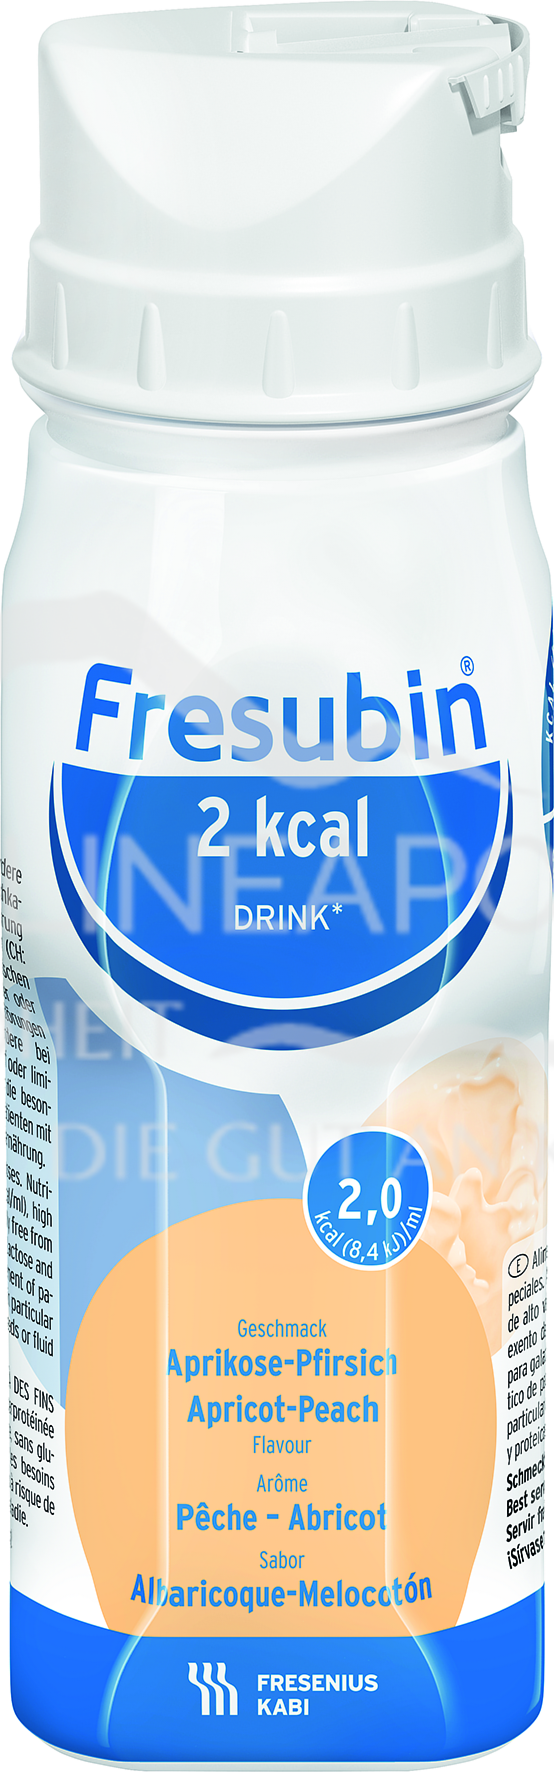 Fresubin® 2kcal Drink Aprikose-Pfirsich